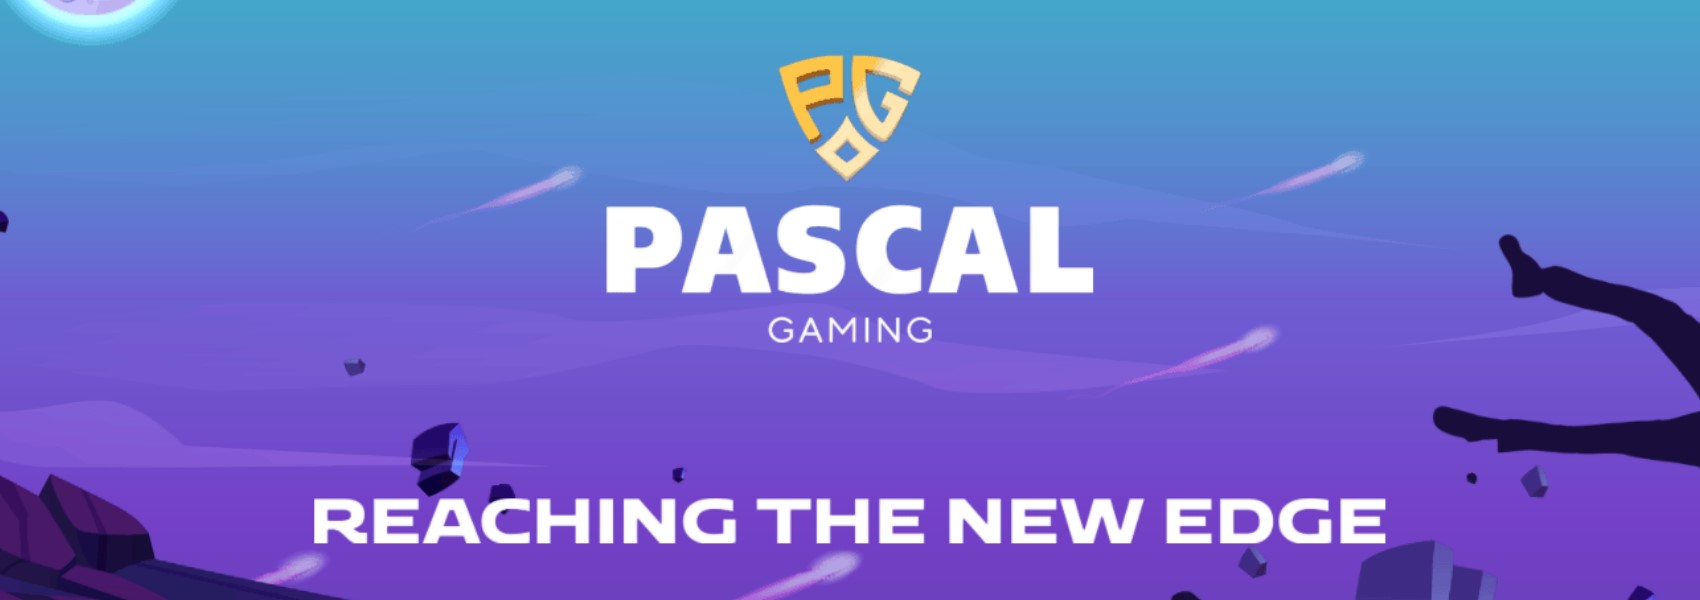 Pascal Gaming game provider